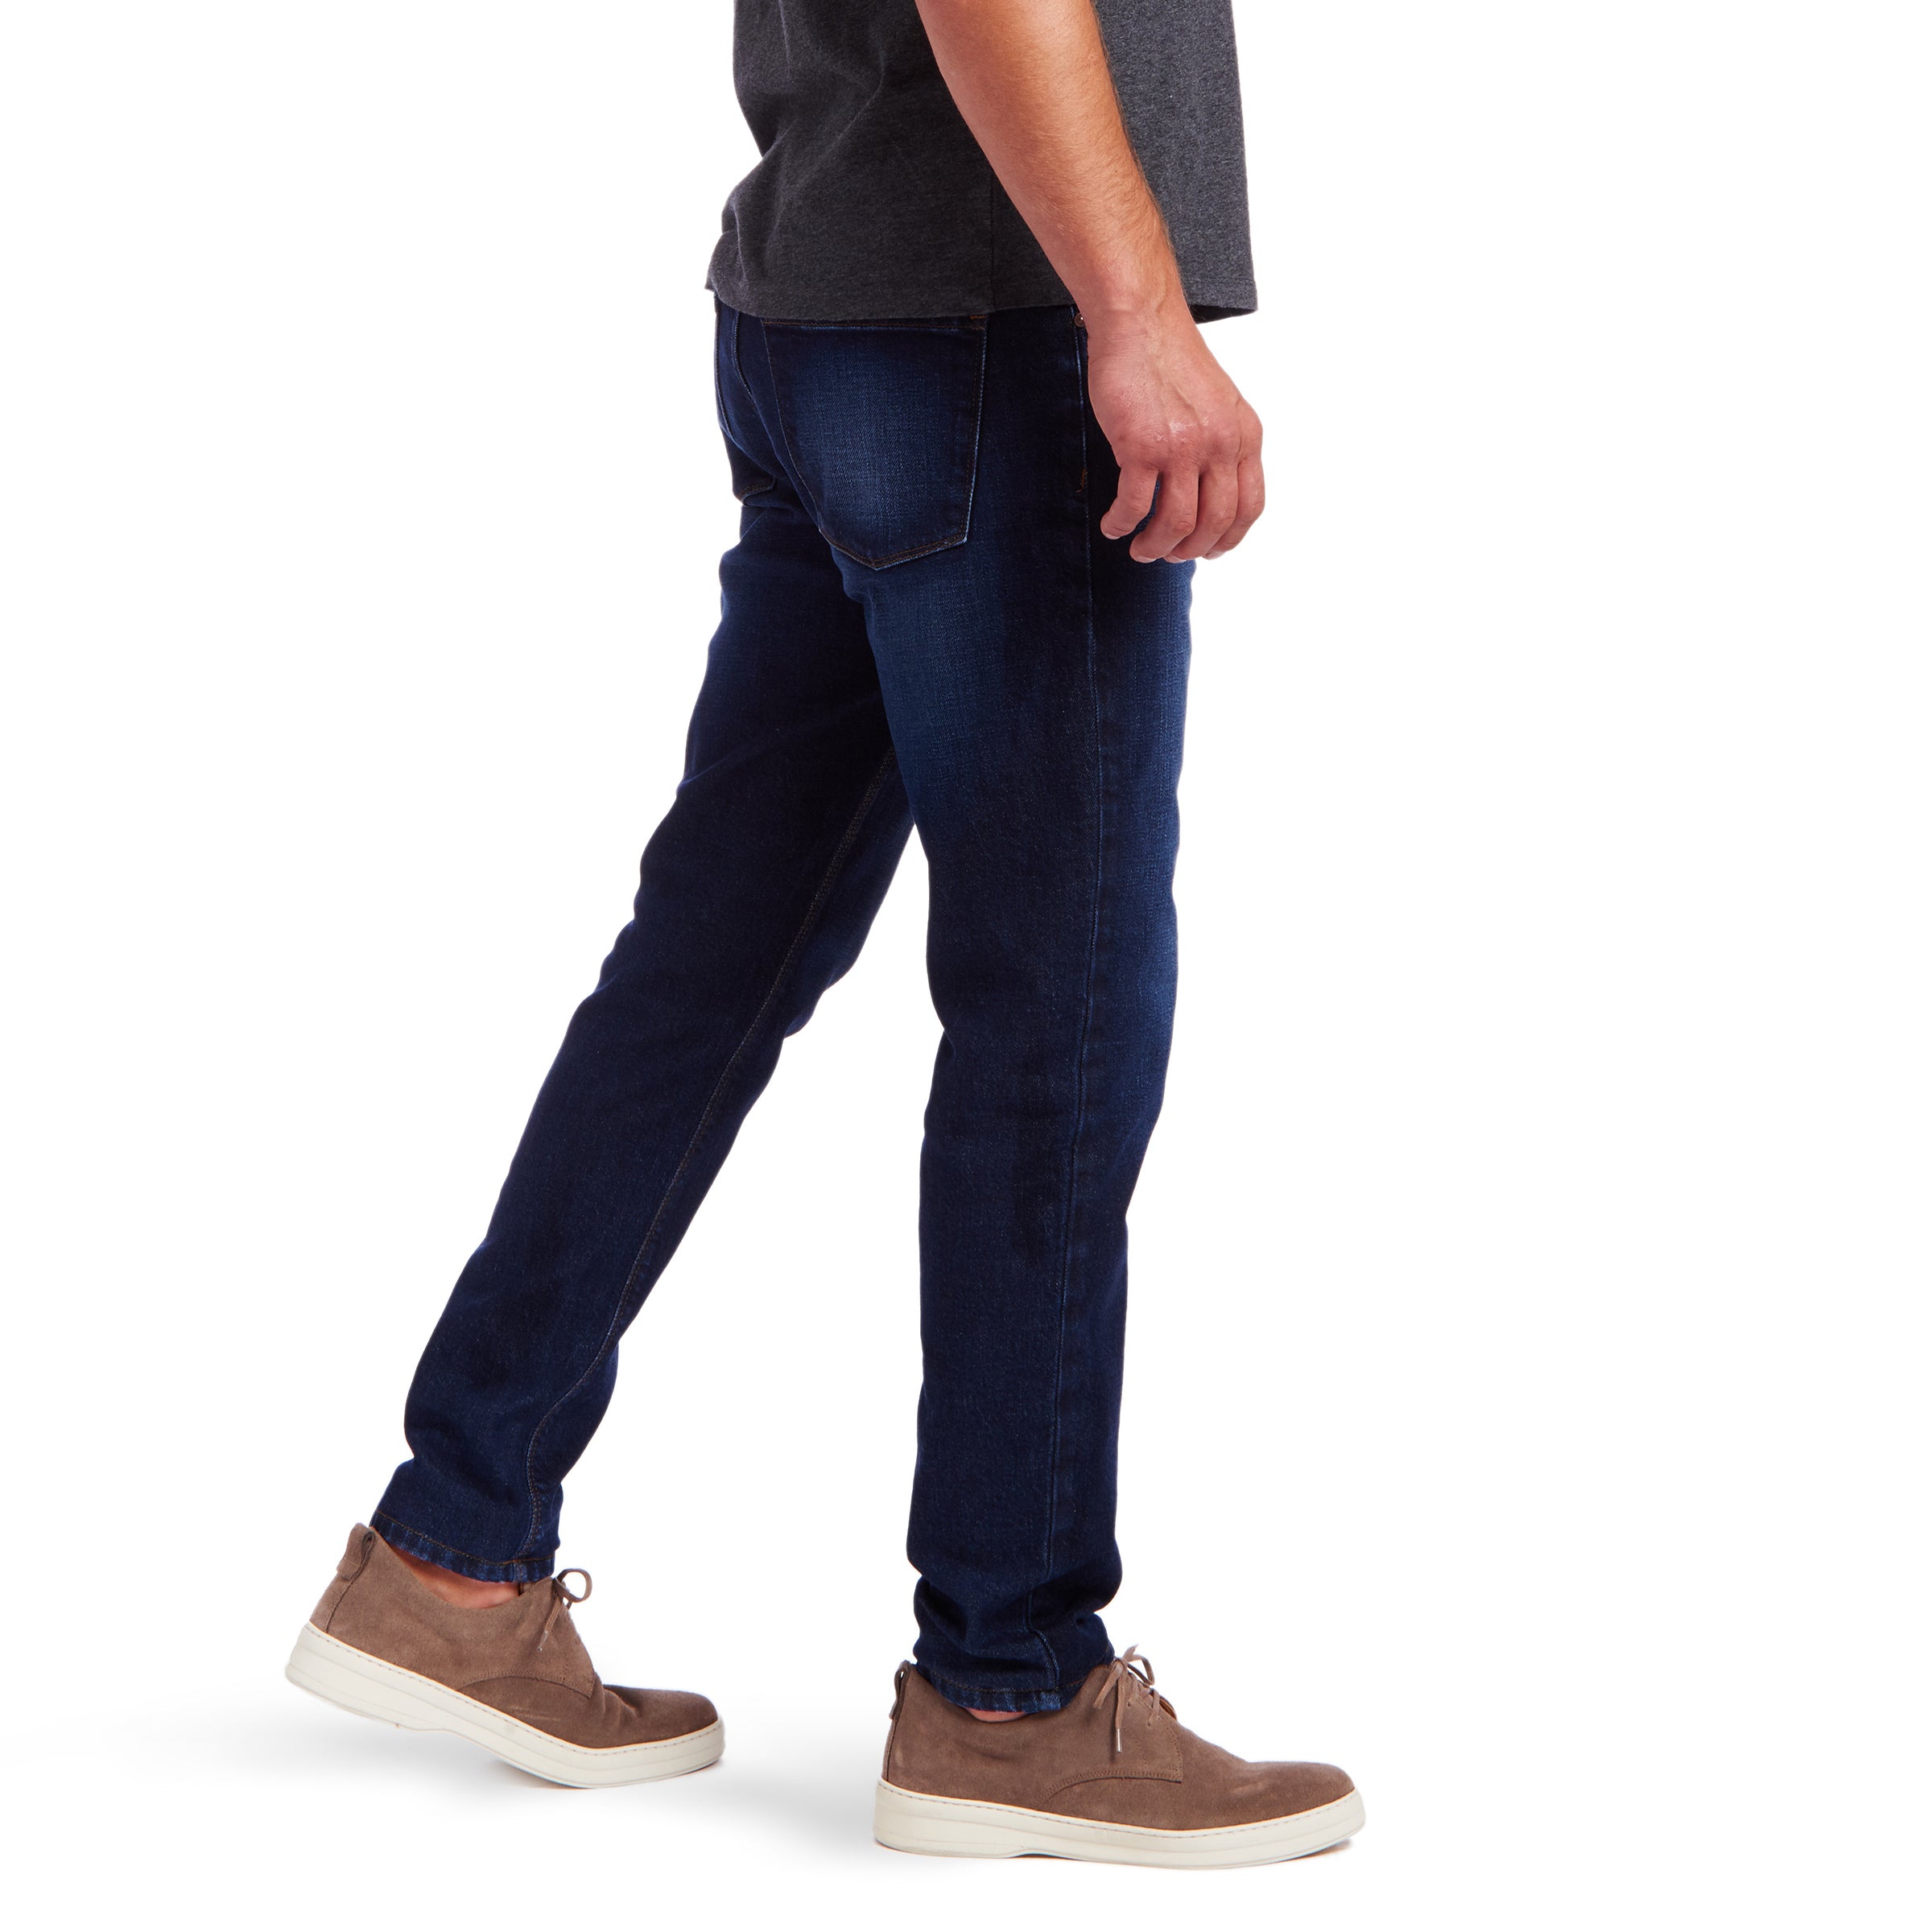 Men wearing Bleu  Médium/Foncé Skinny Hubert Jeans